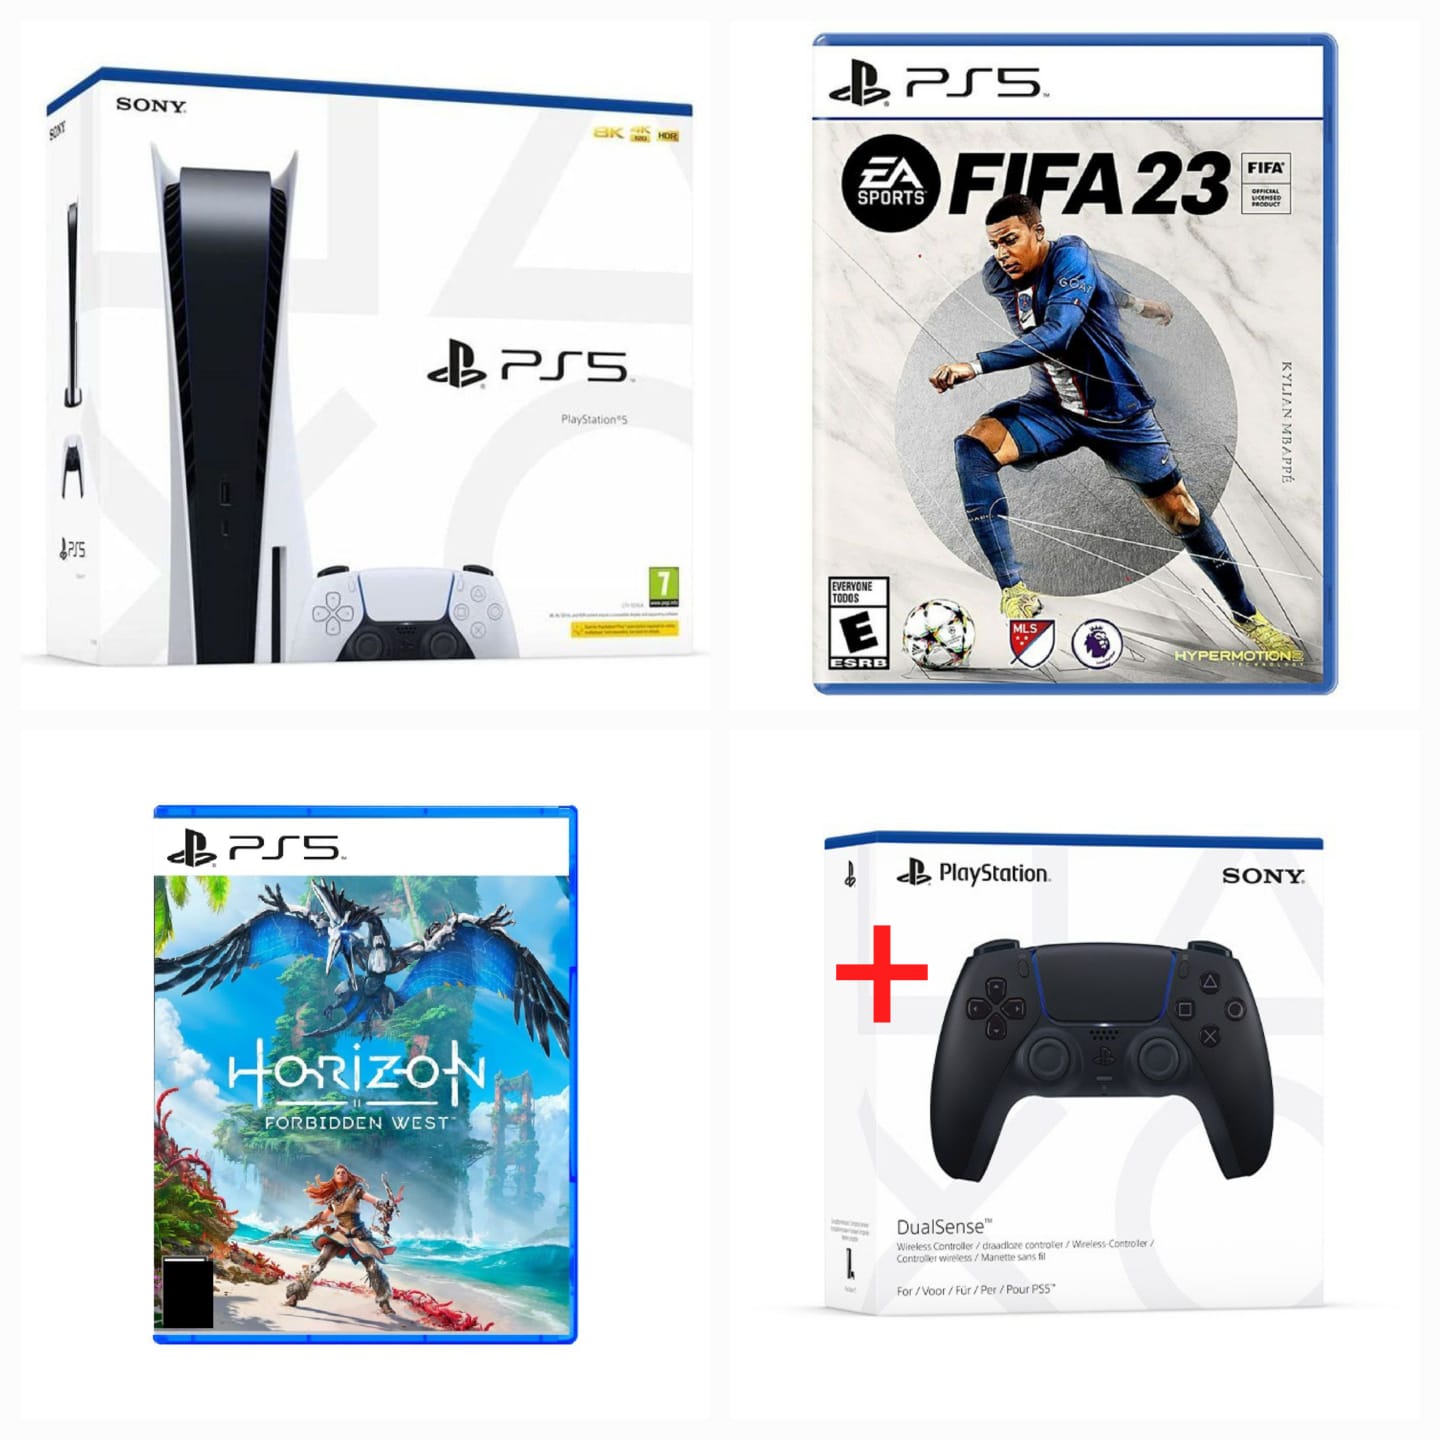 Sony Playstation PS5 -FIFA 23 + Horizon Bundle + DualSense Free Controller- , PS5-CFI1116A01